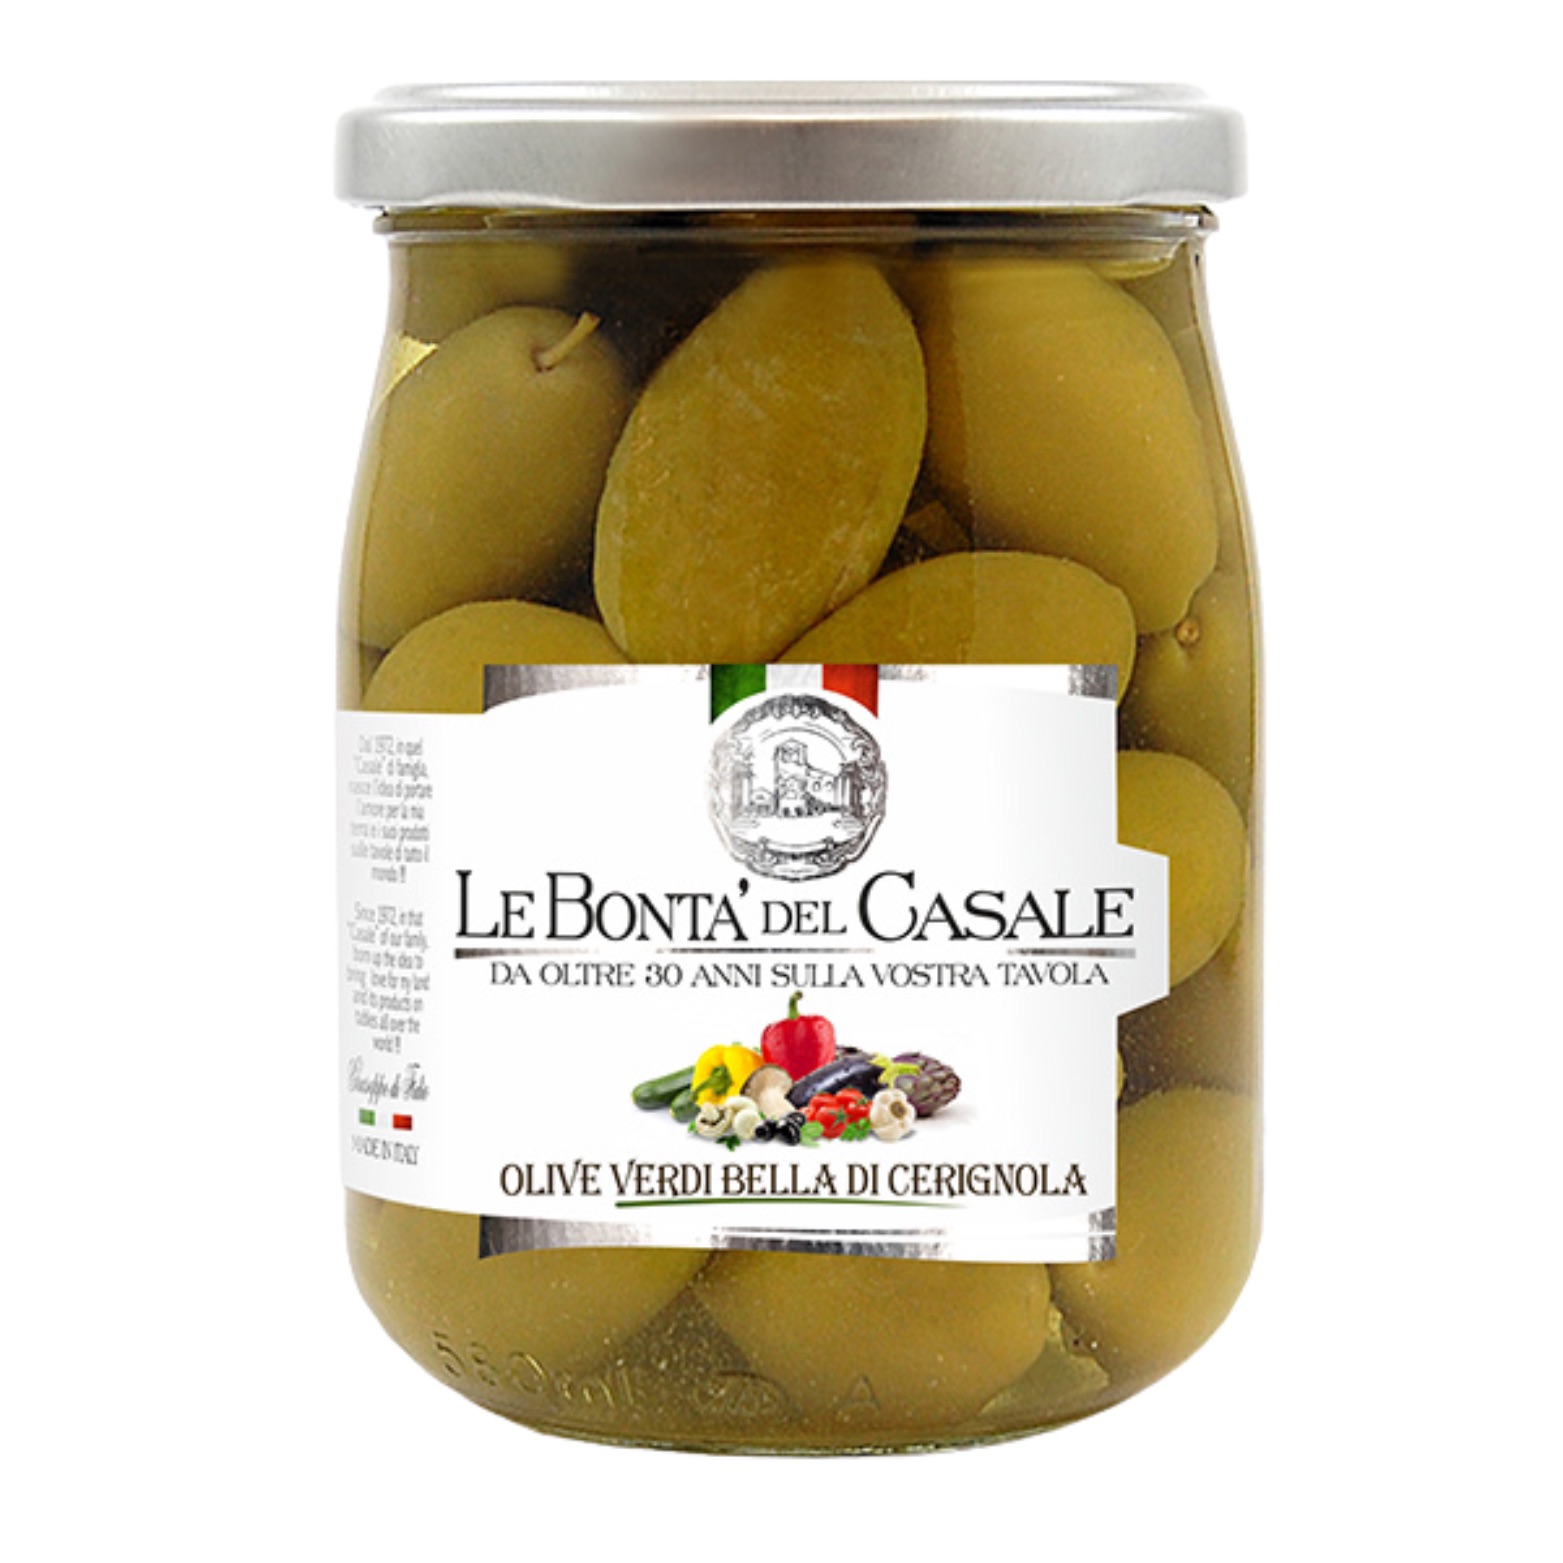 Riesen Oliven in Salzlake 530 ml – Hersteller Le Bonta del Casale